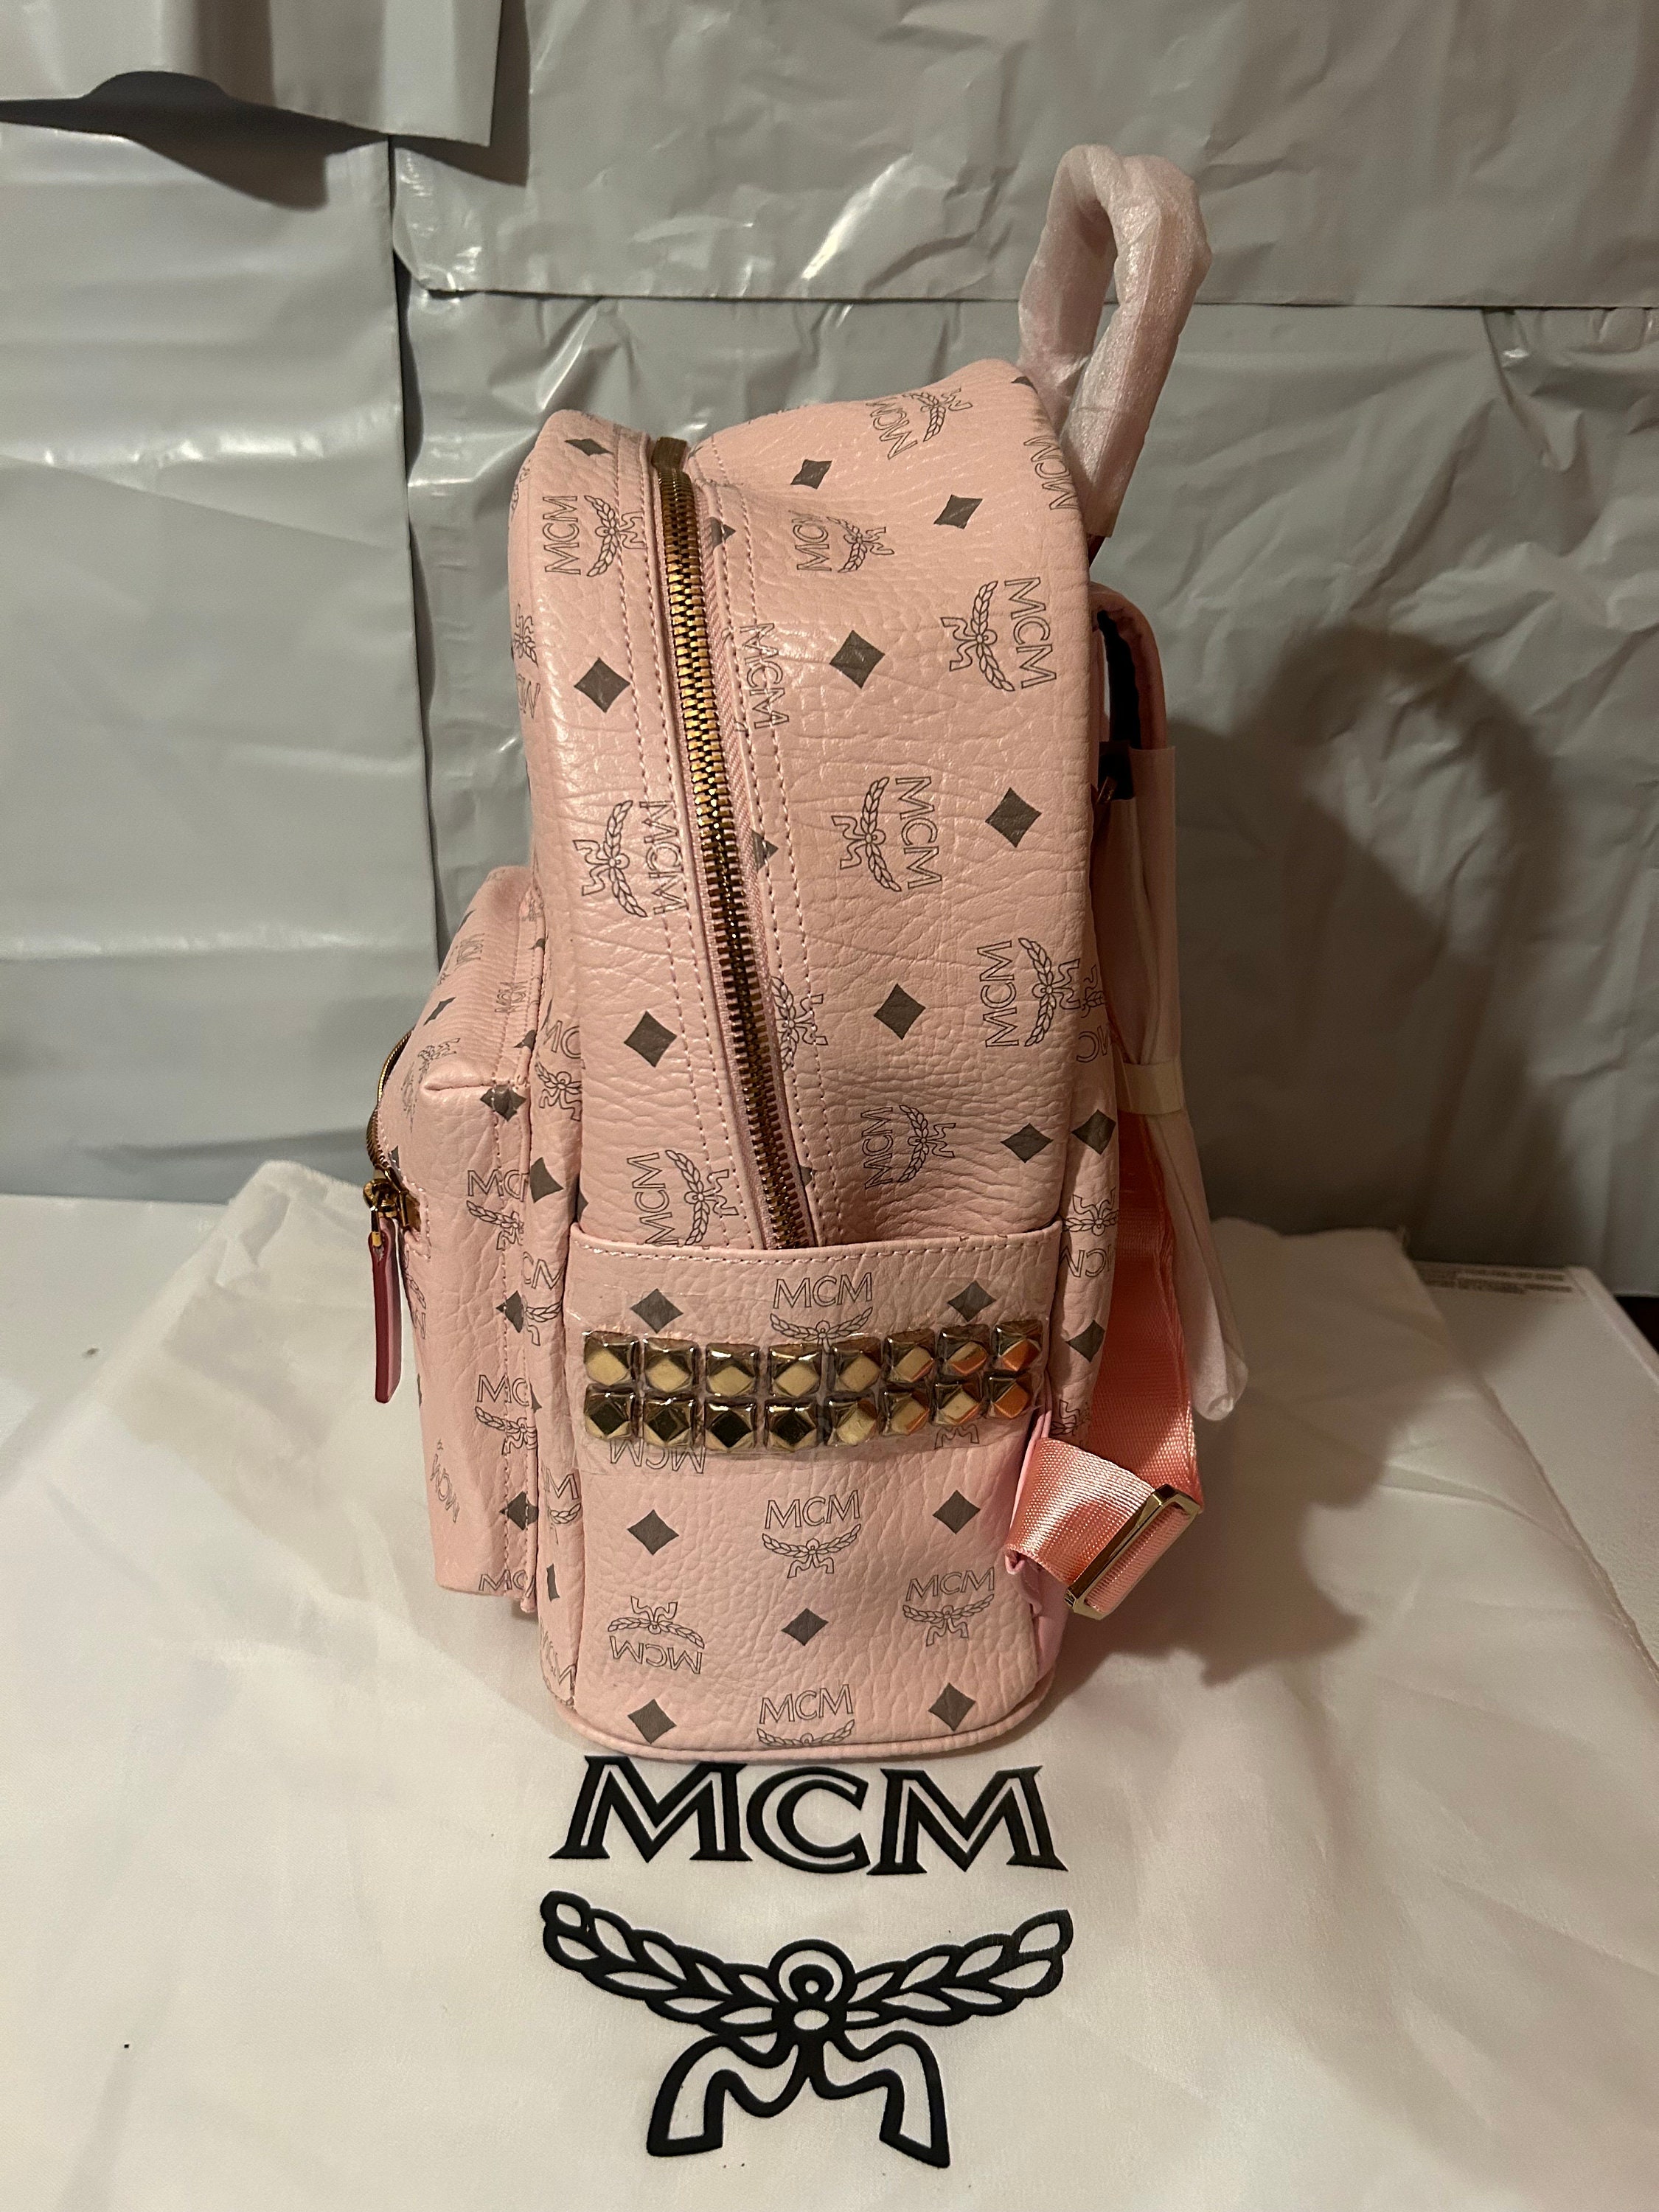 Authentic MCM Backpack from S. Korea  Mcm backpack, Backpacks, Mcm bag  backpacks